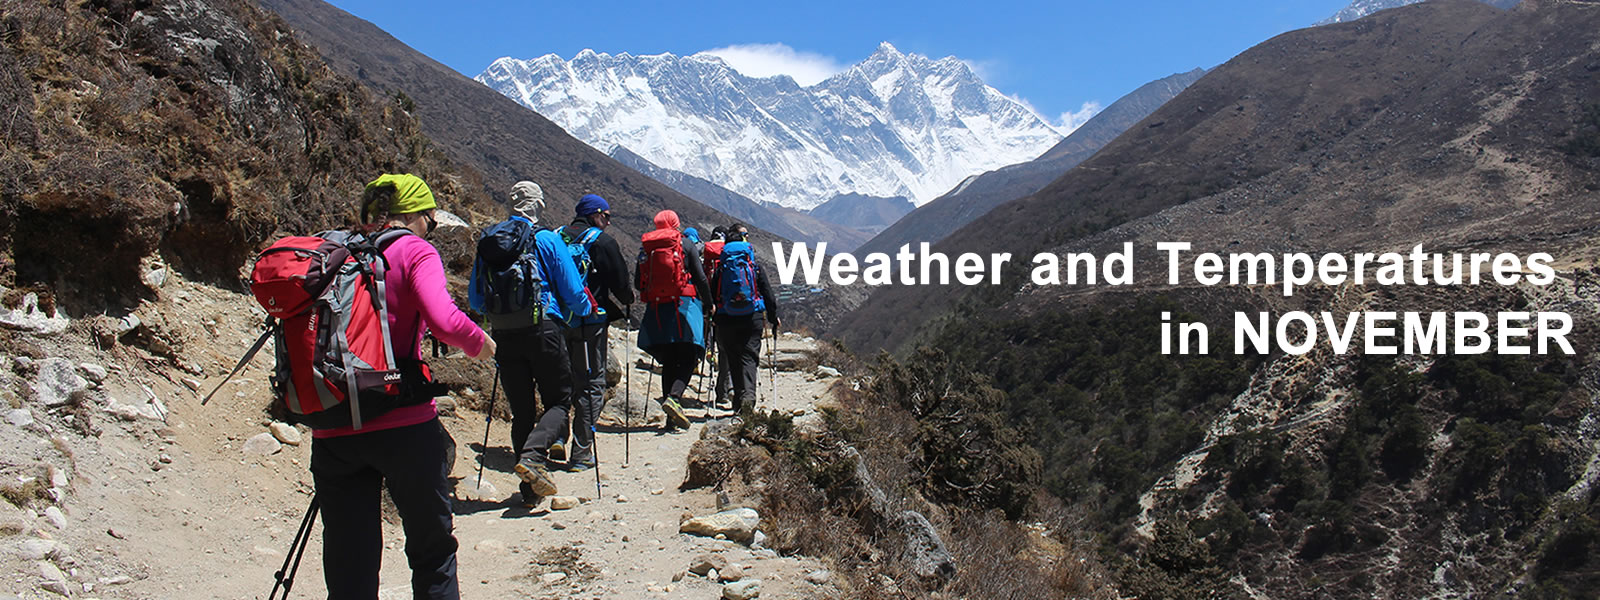 Trekking in Nepal in November Weather and Temperatures